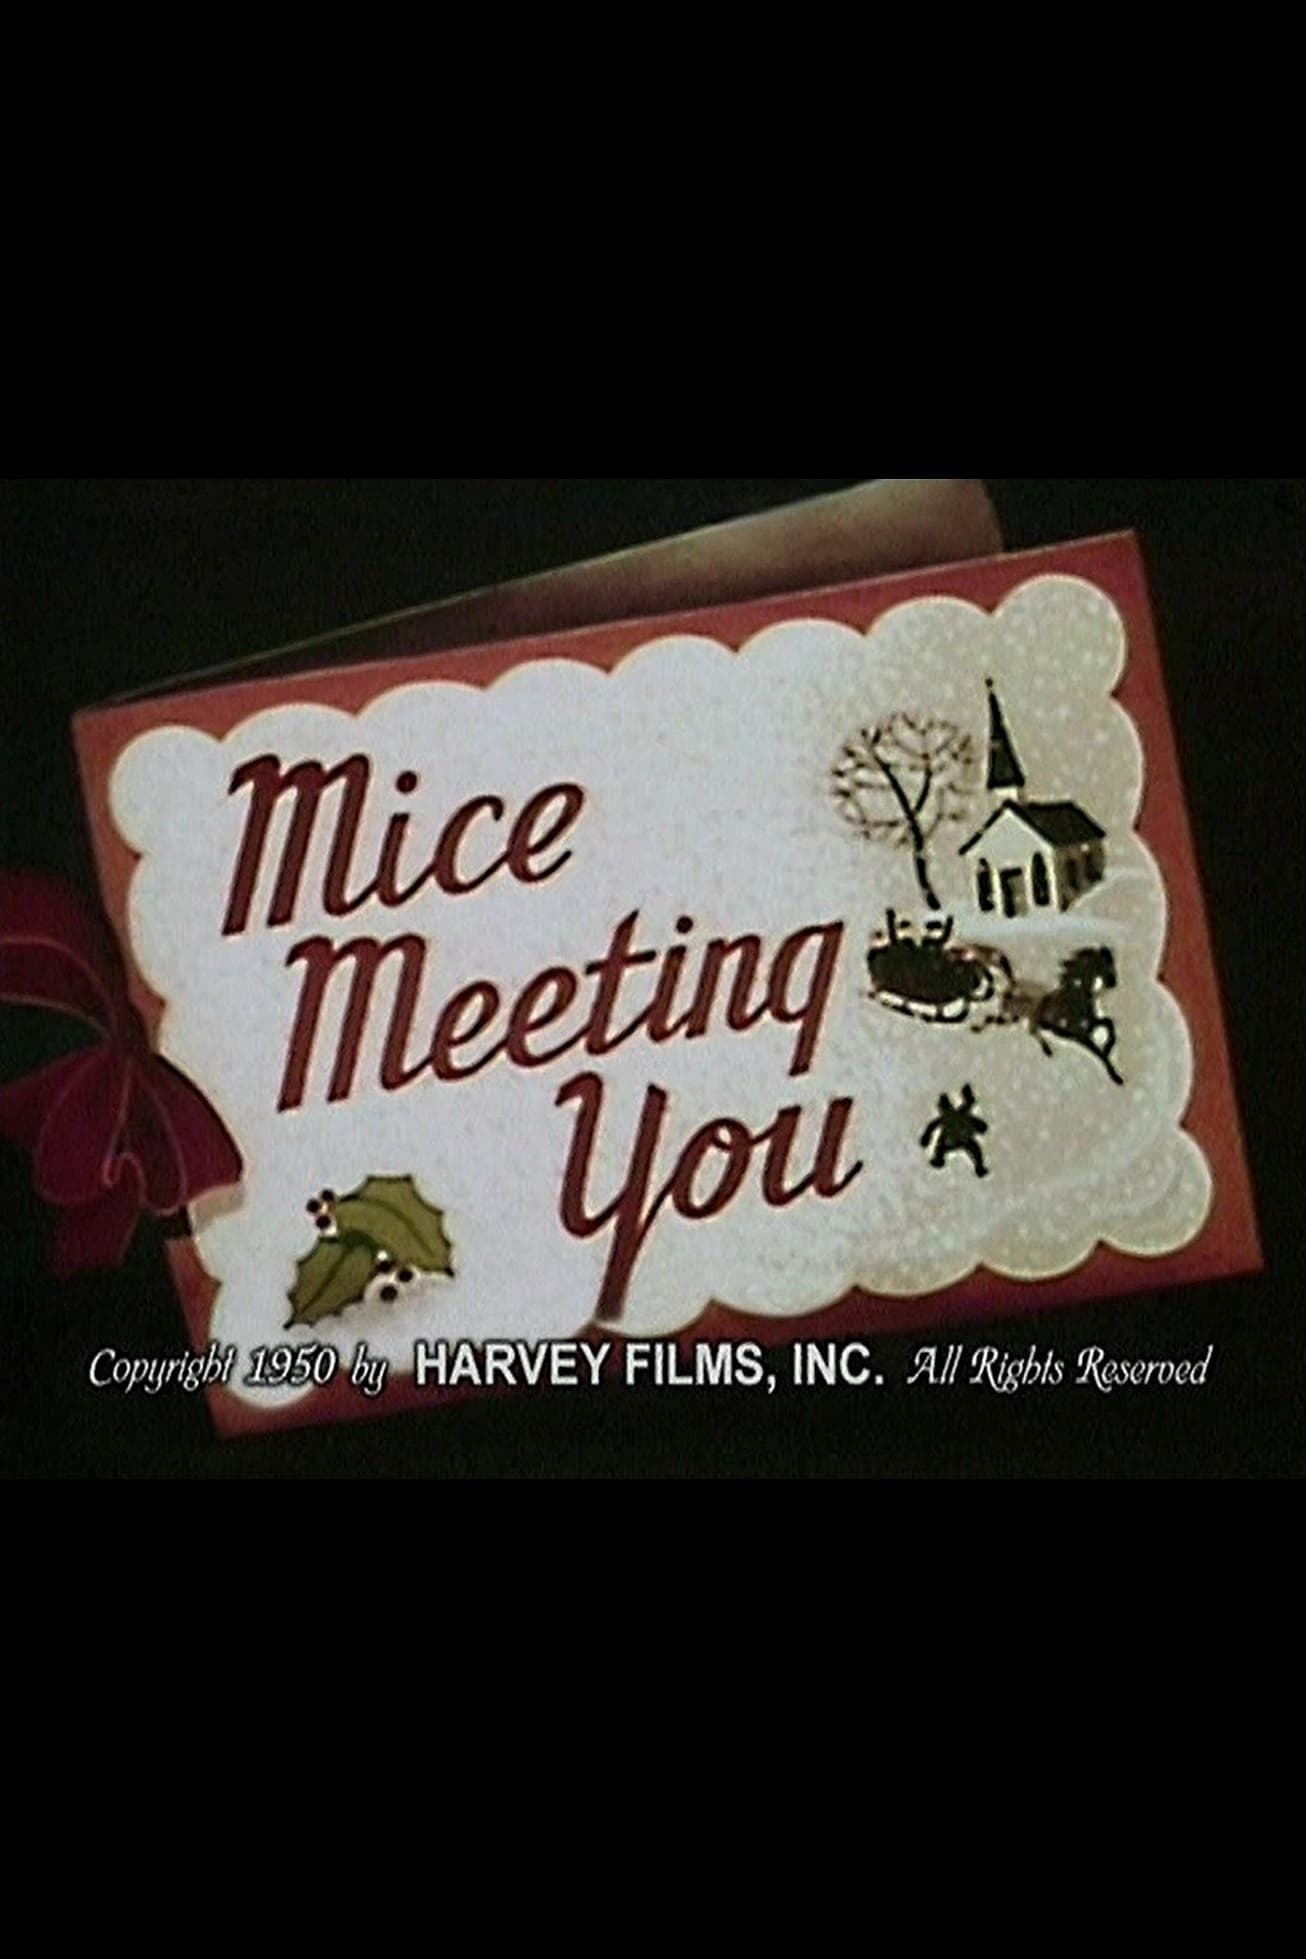 Mice Meeting You